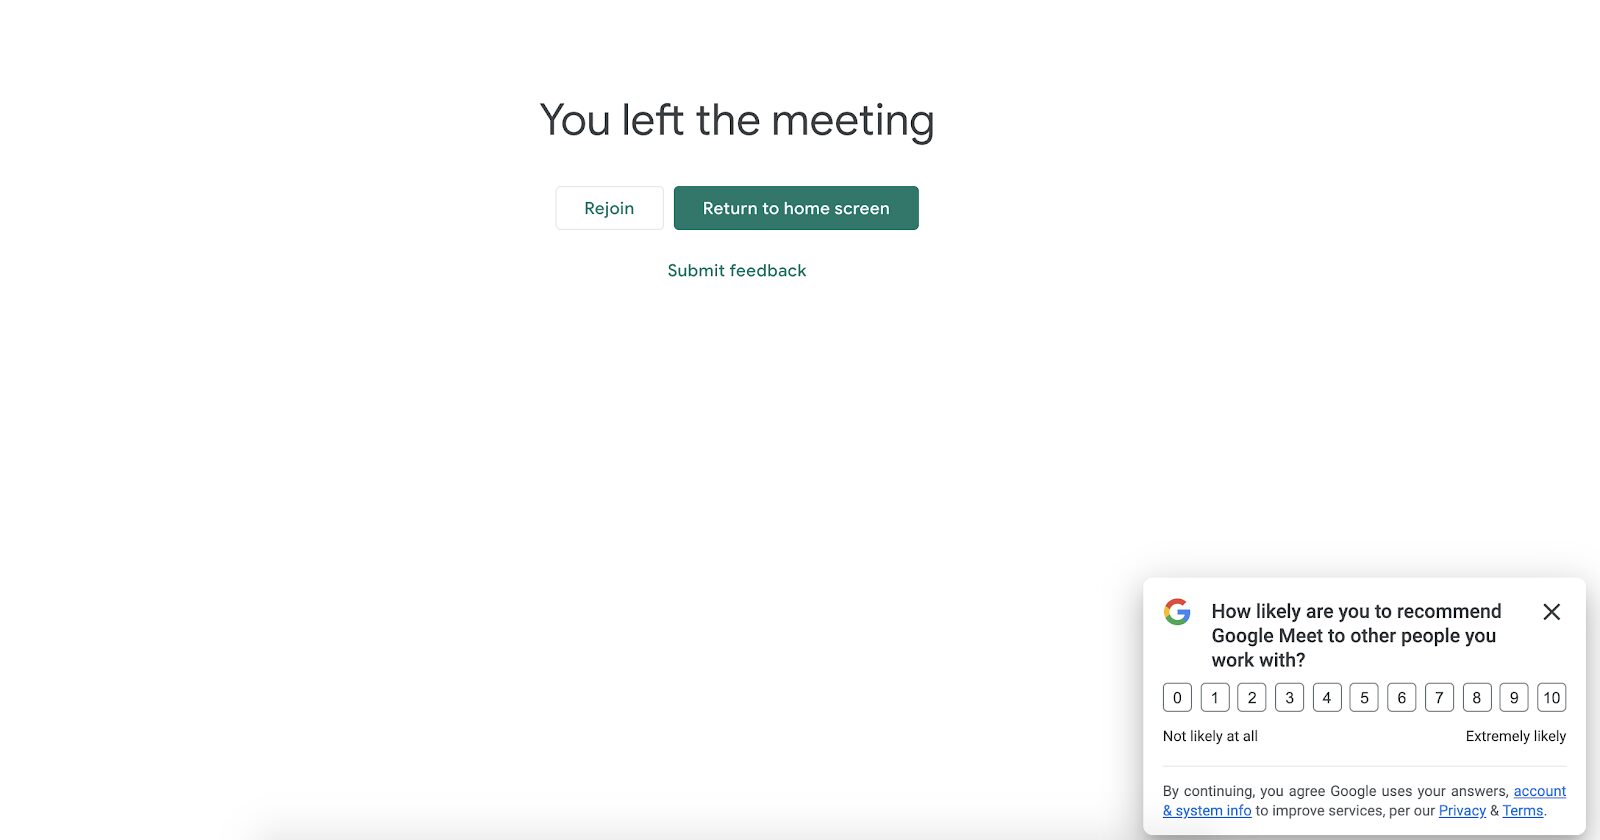 Google Meet의 NPS 설문조사는 방문자가 통화를 종료한 후에 표시되므로 방문자는 자신의 경험에 대한 피드백을 즉시 제공할 수 있습니다. 피드백이 아직 최신일 때 사용자가 피드백을 공유하도록 장려하는 것은 훌륭한 전술입니다.